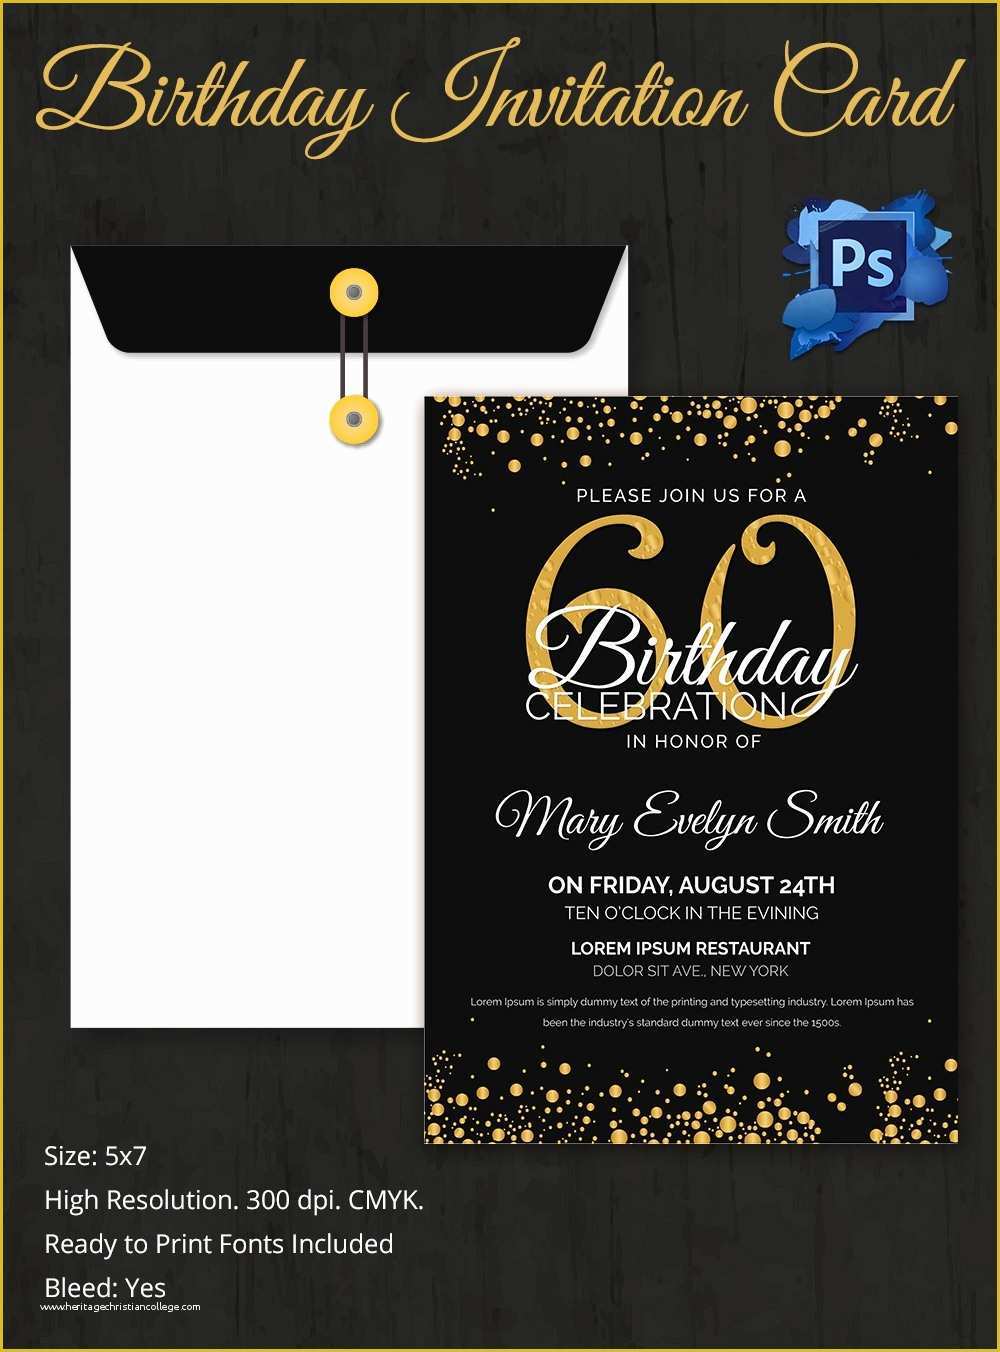 Reception Invitation Templates Free Download Of Birthday Invitation Template 32 Free Word Pdf Psd Ai